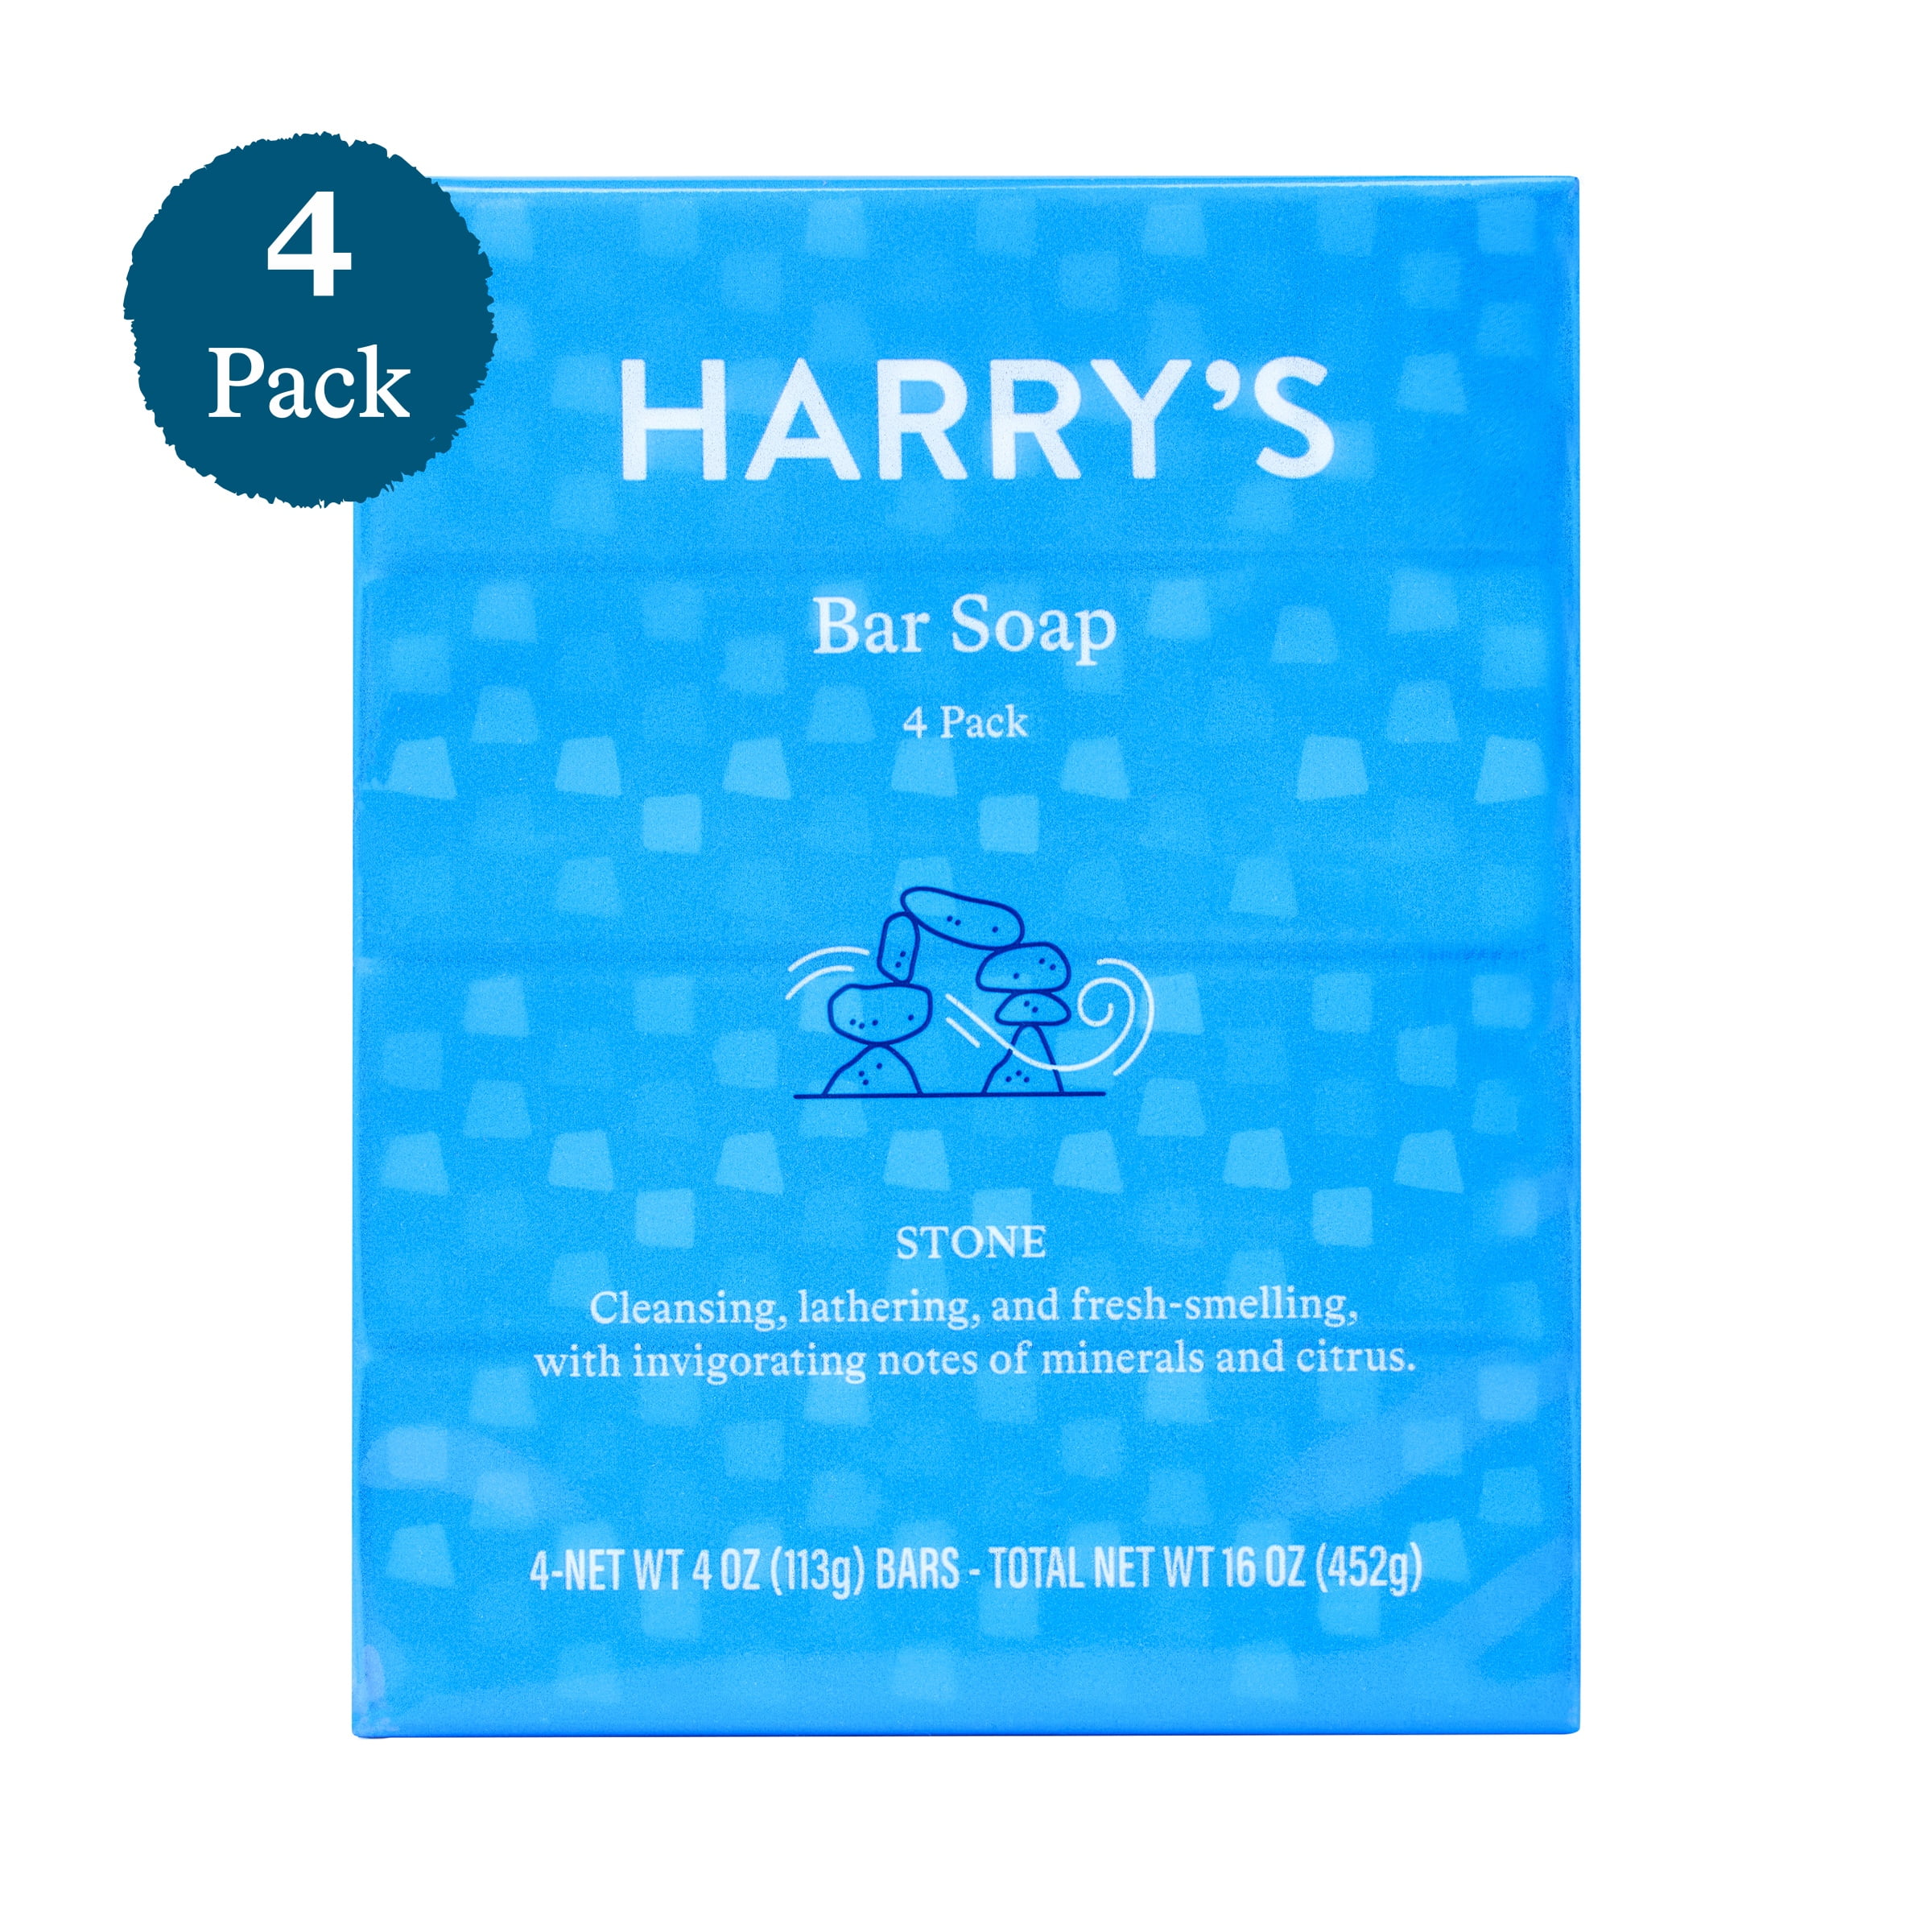 HARRY'S Shiso Bar Soap (3-PACK) 5 oz Fresh Herbs (New) – PayWut